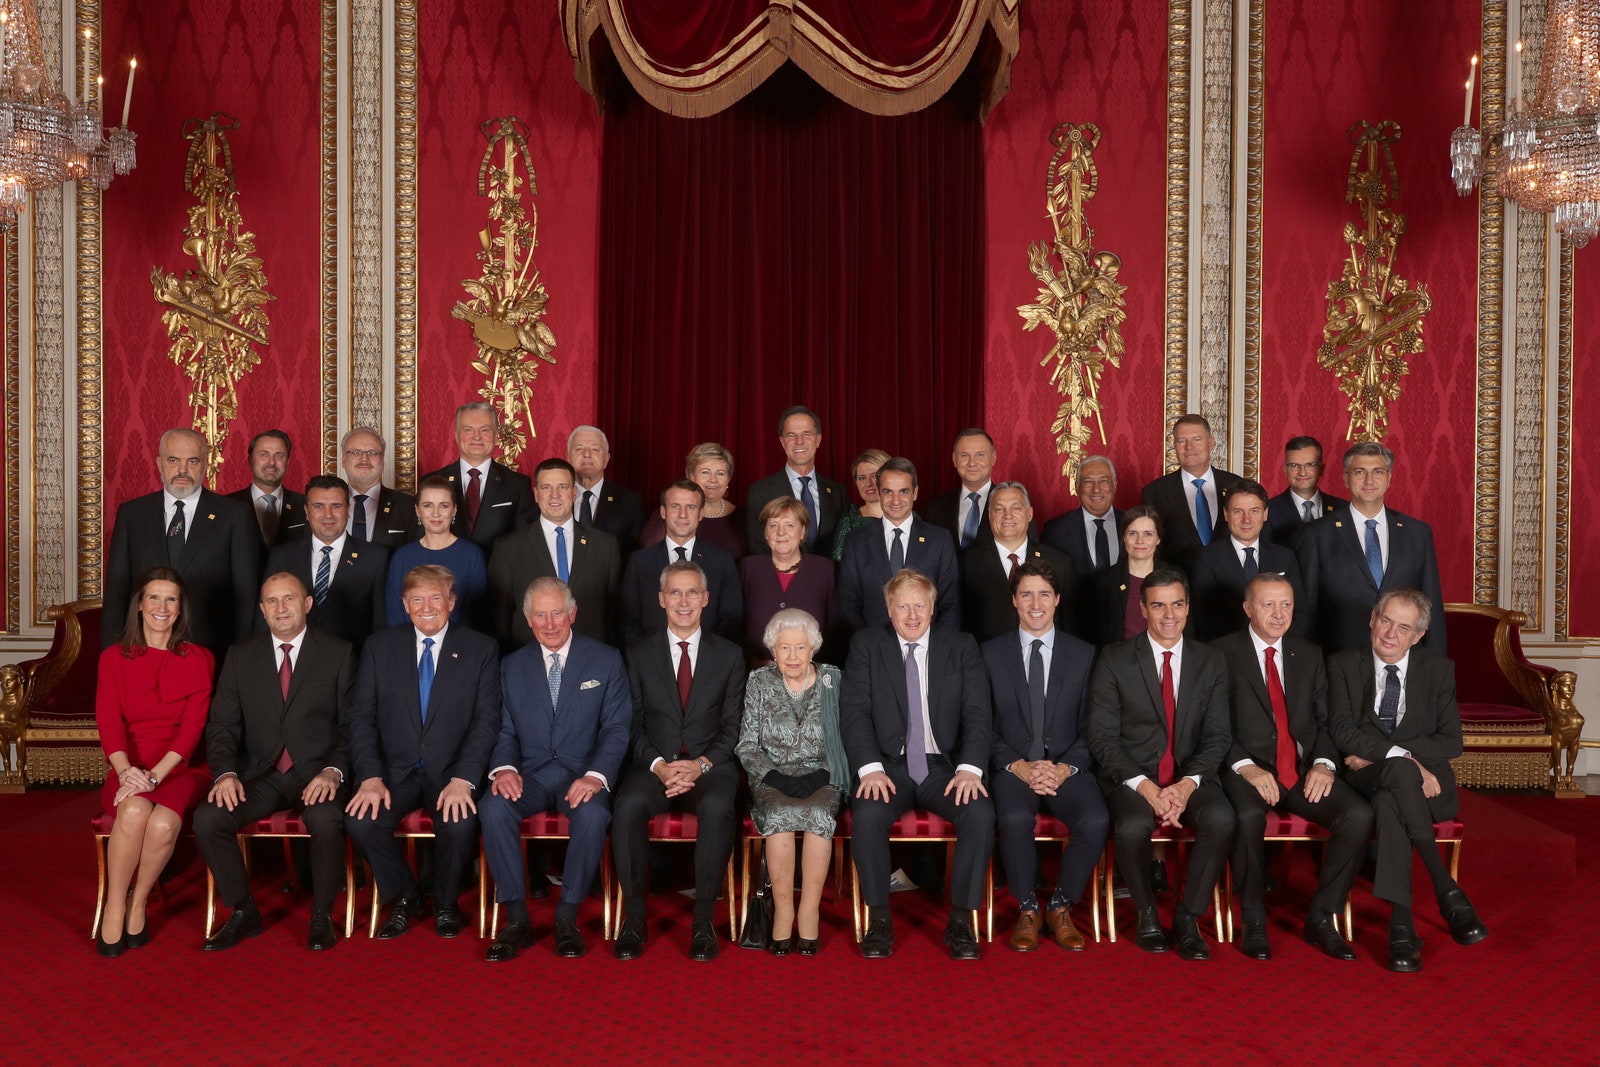 Мелания Трамп Кейт Миддлтон и другие гости юбилейного саммита НАТО в Букингемском дворце